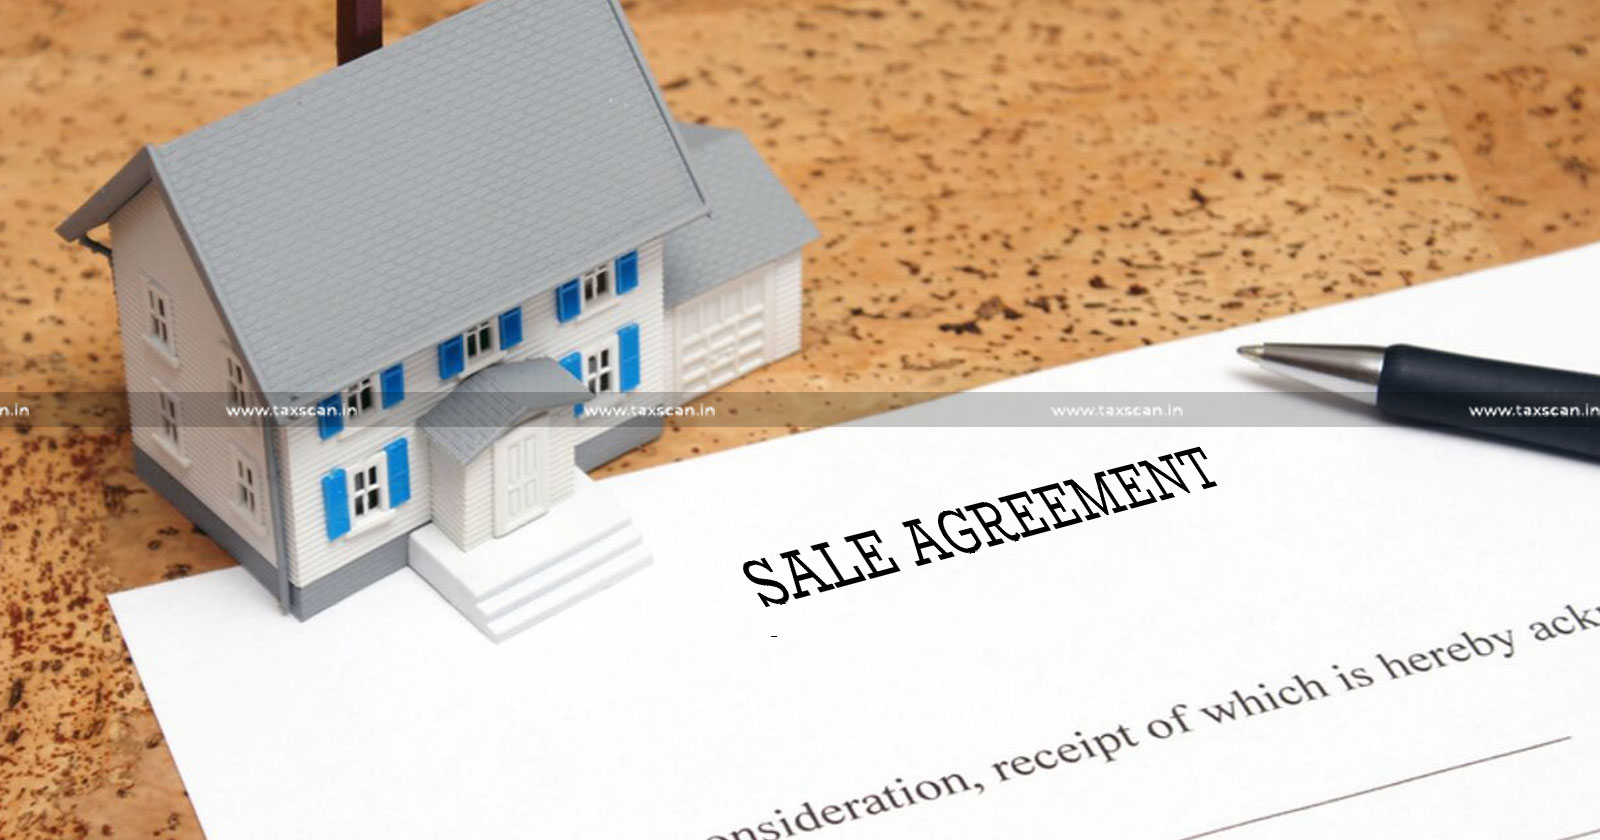 Value - Property - assessed - SVA - Agreement - computing - full value - consideration - ITAT - taxscan